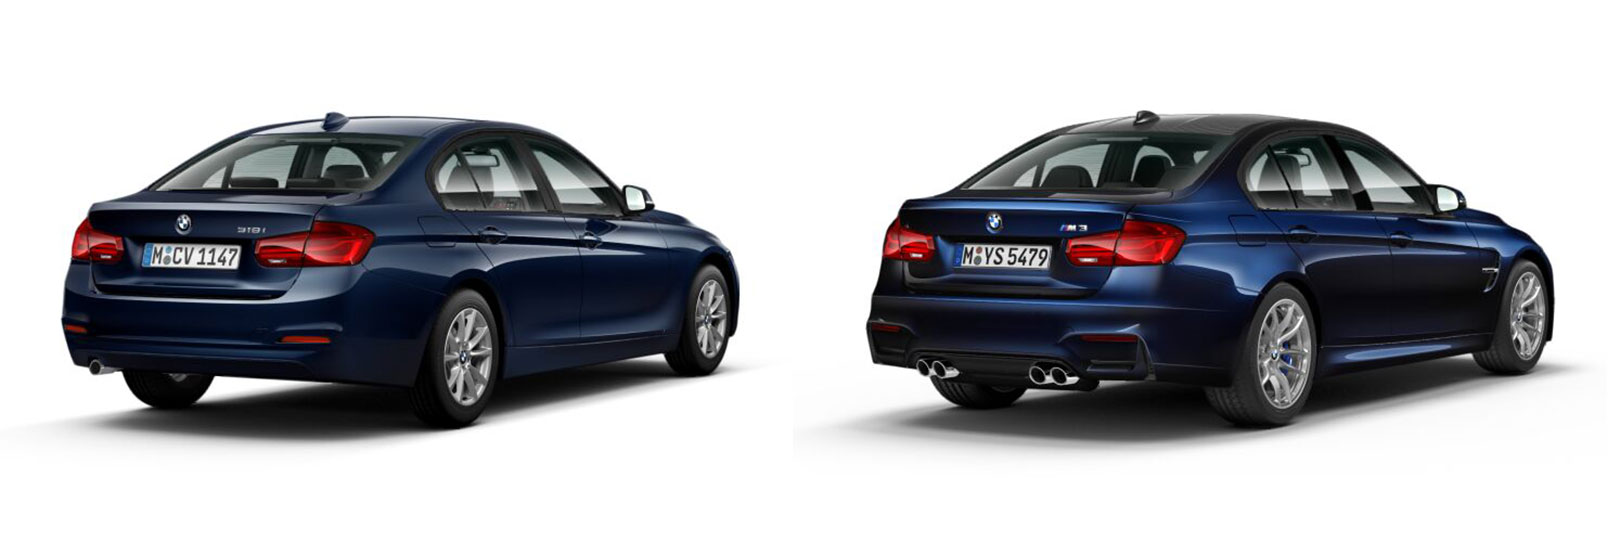 BMW 3 Series (F30) and BMW M3 (F80)